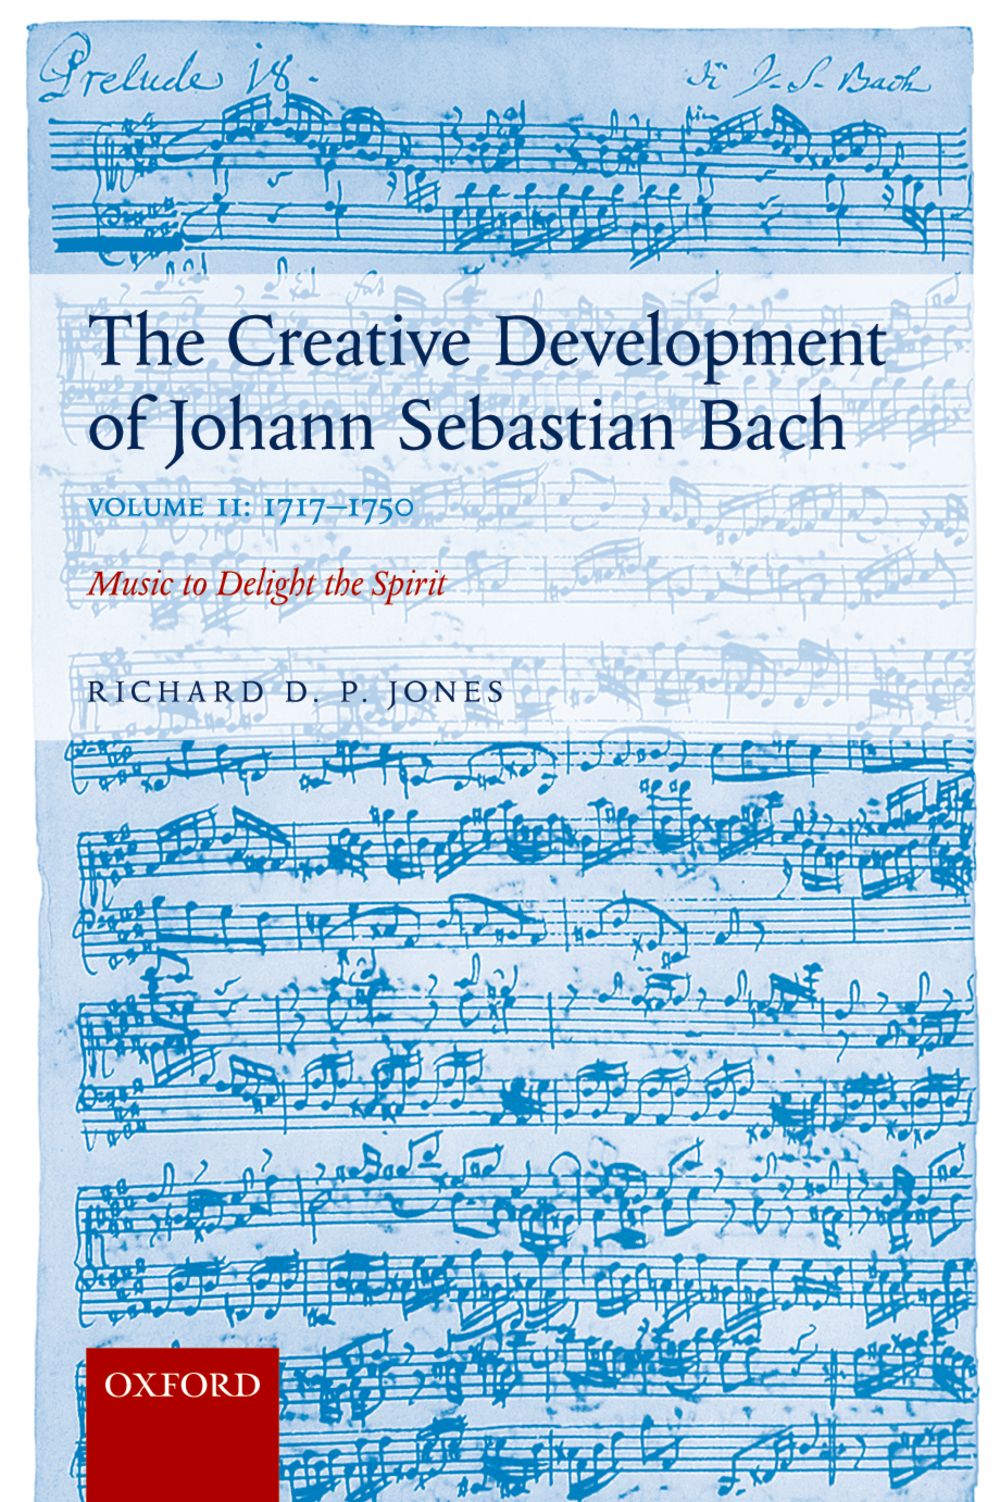 Creative Development Of Js Bach Vol Ii 1717-1750 Sheet Music Songbook